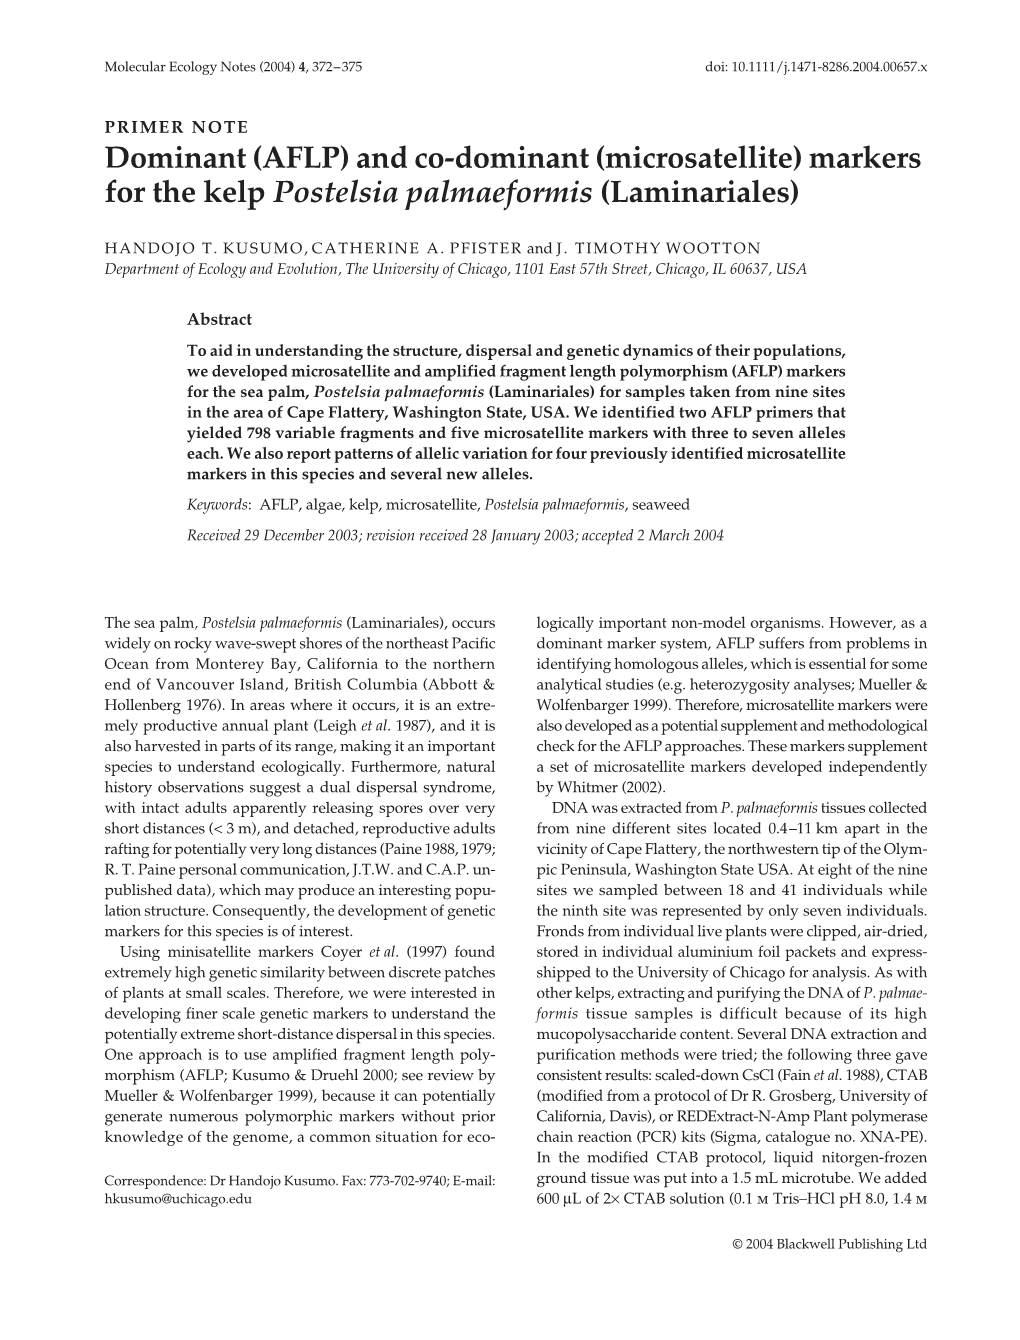 Microsatellite) Markers for the Kelp Postelsia Palmaeformis (Laminariales